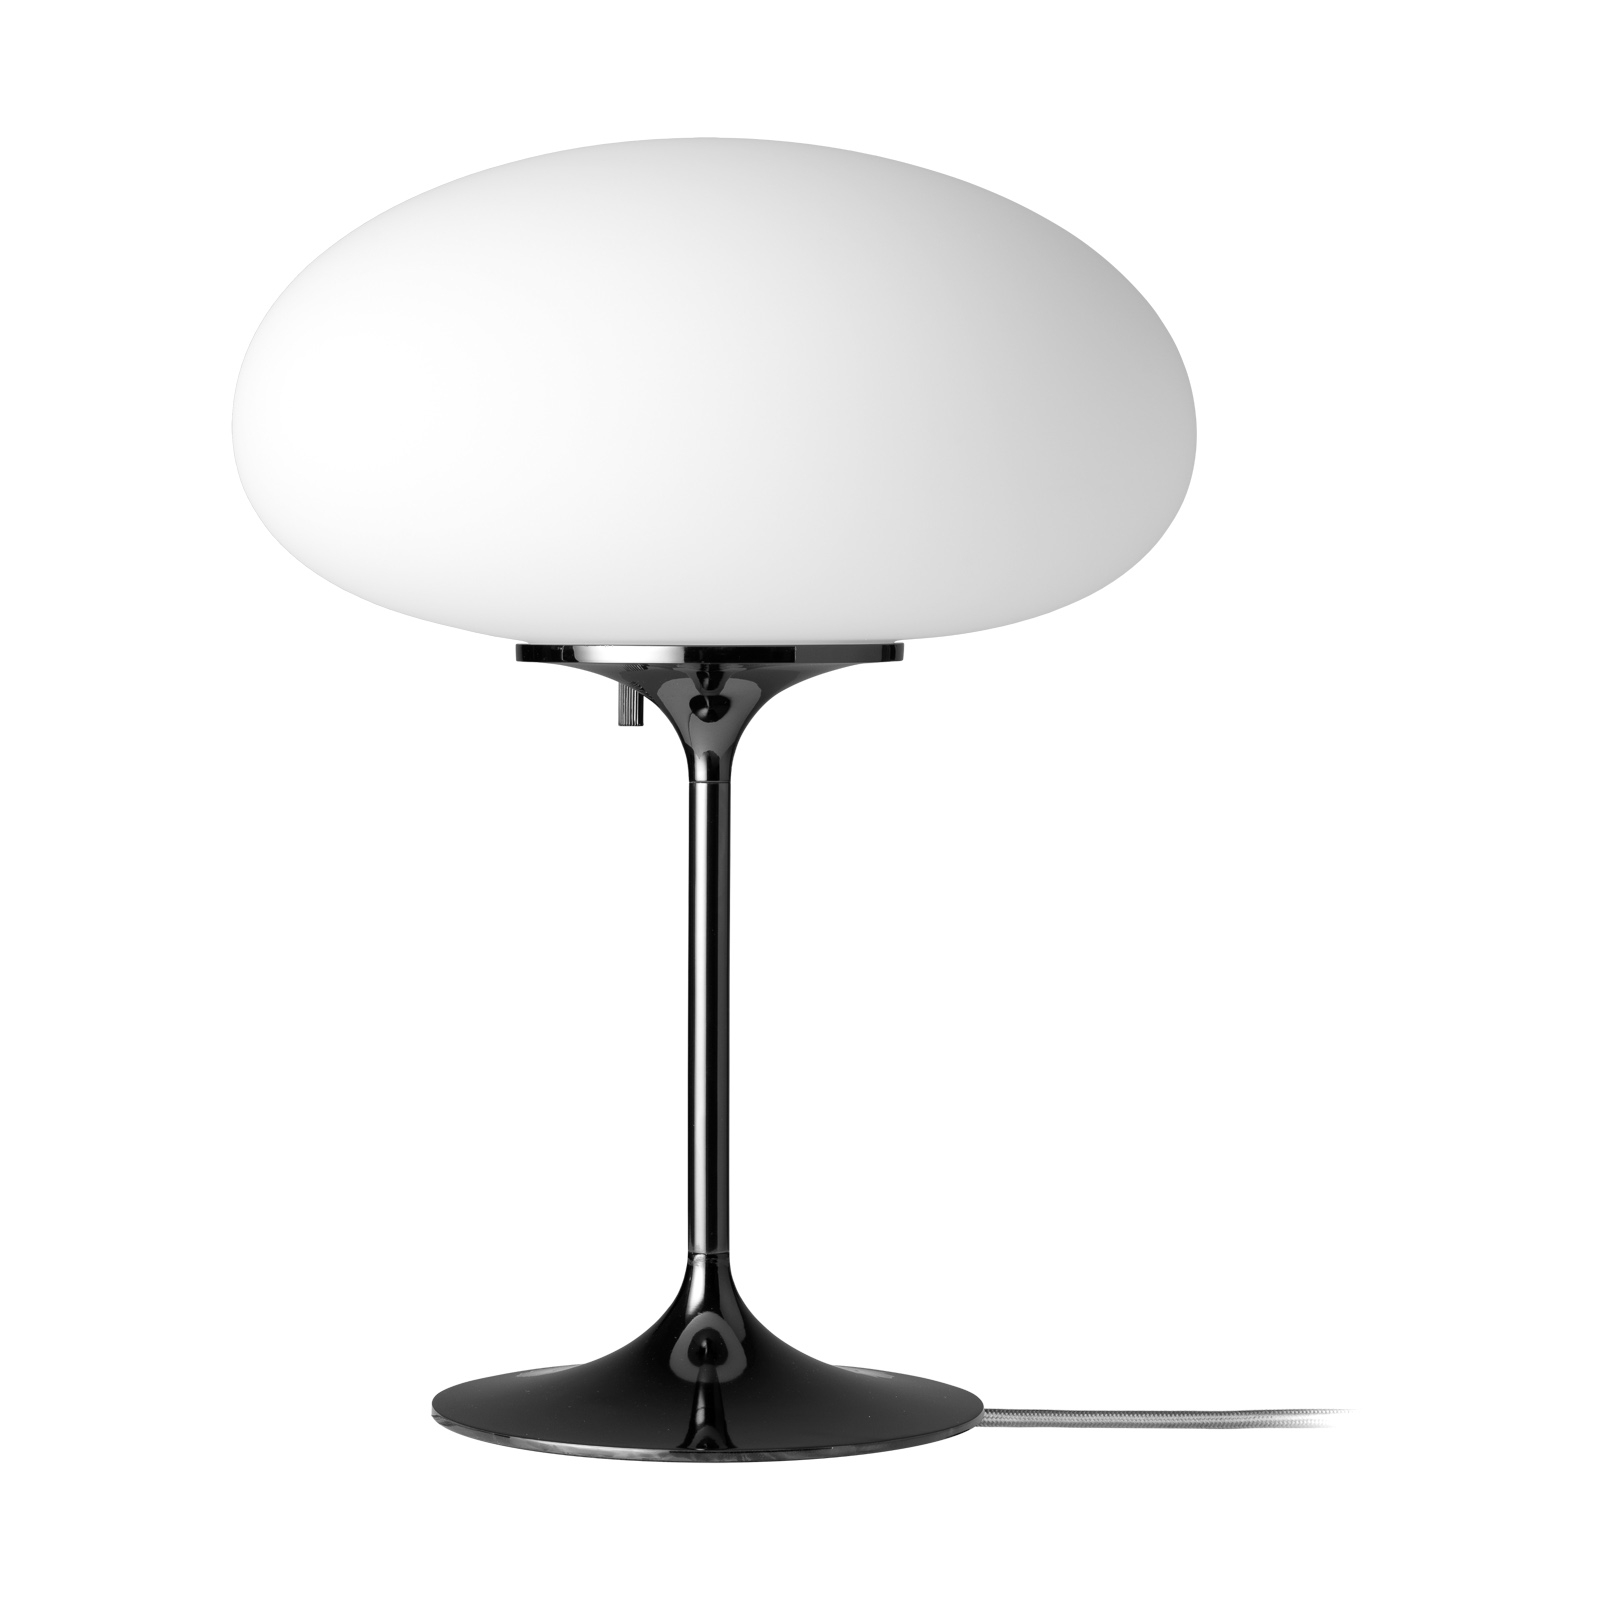 GUBI Stemlite lampe à poser, noire-chromée, 42 cm